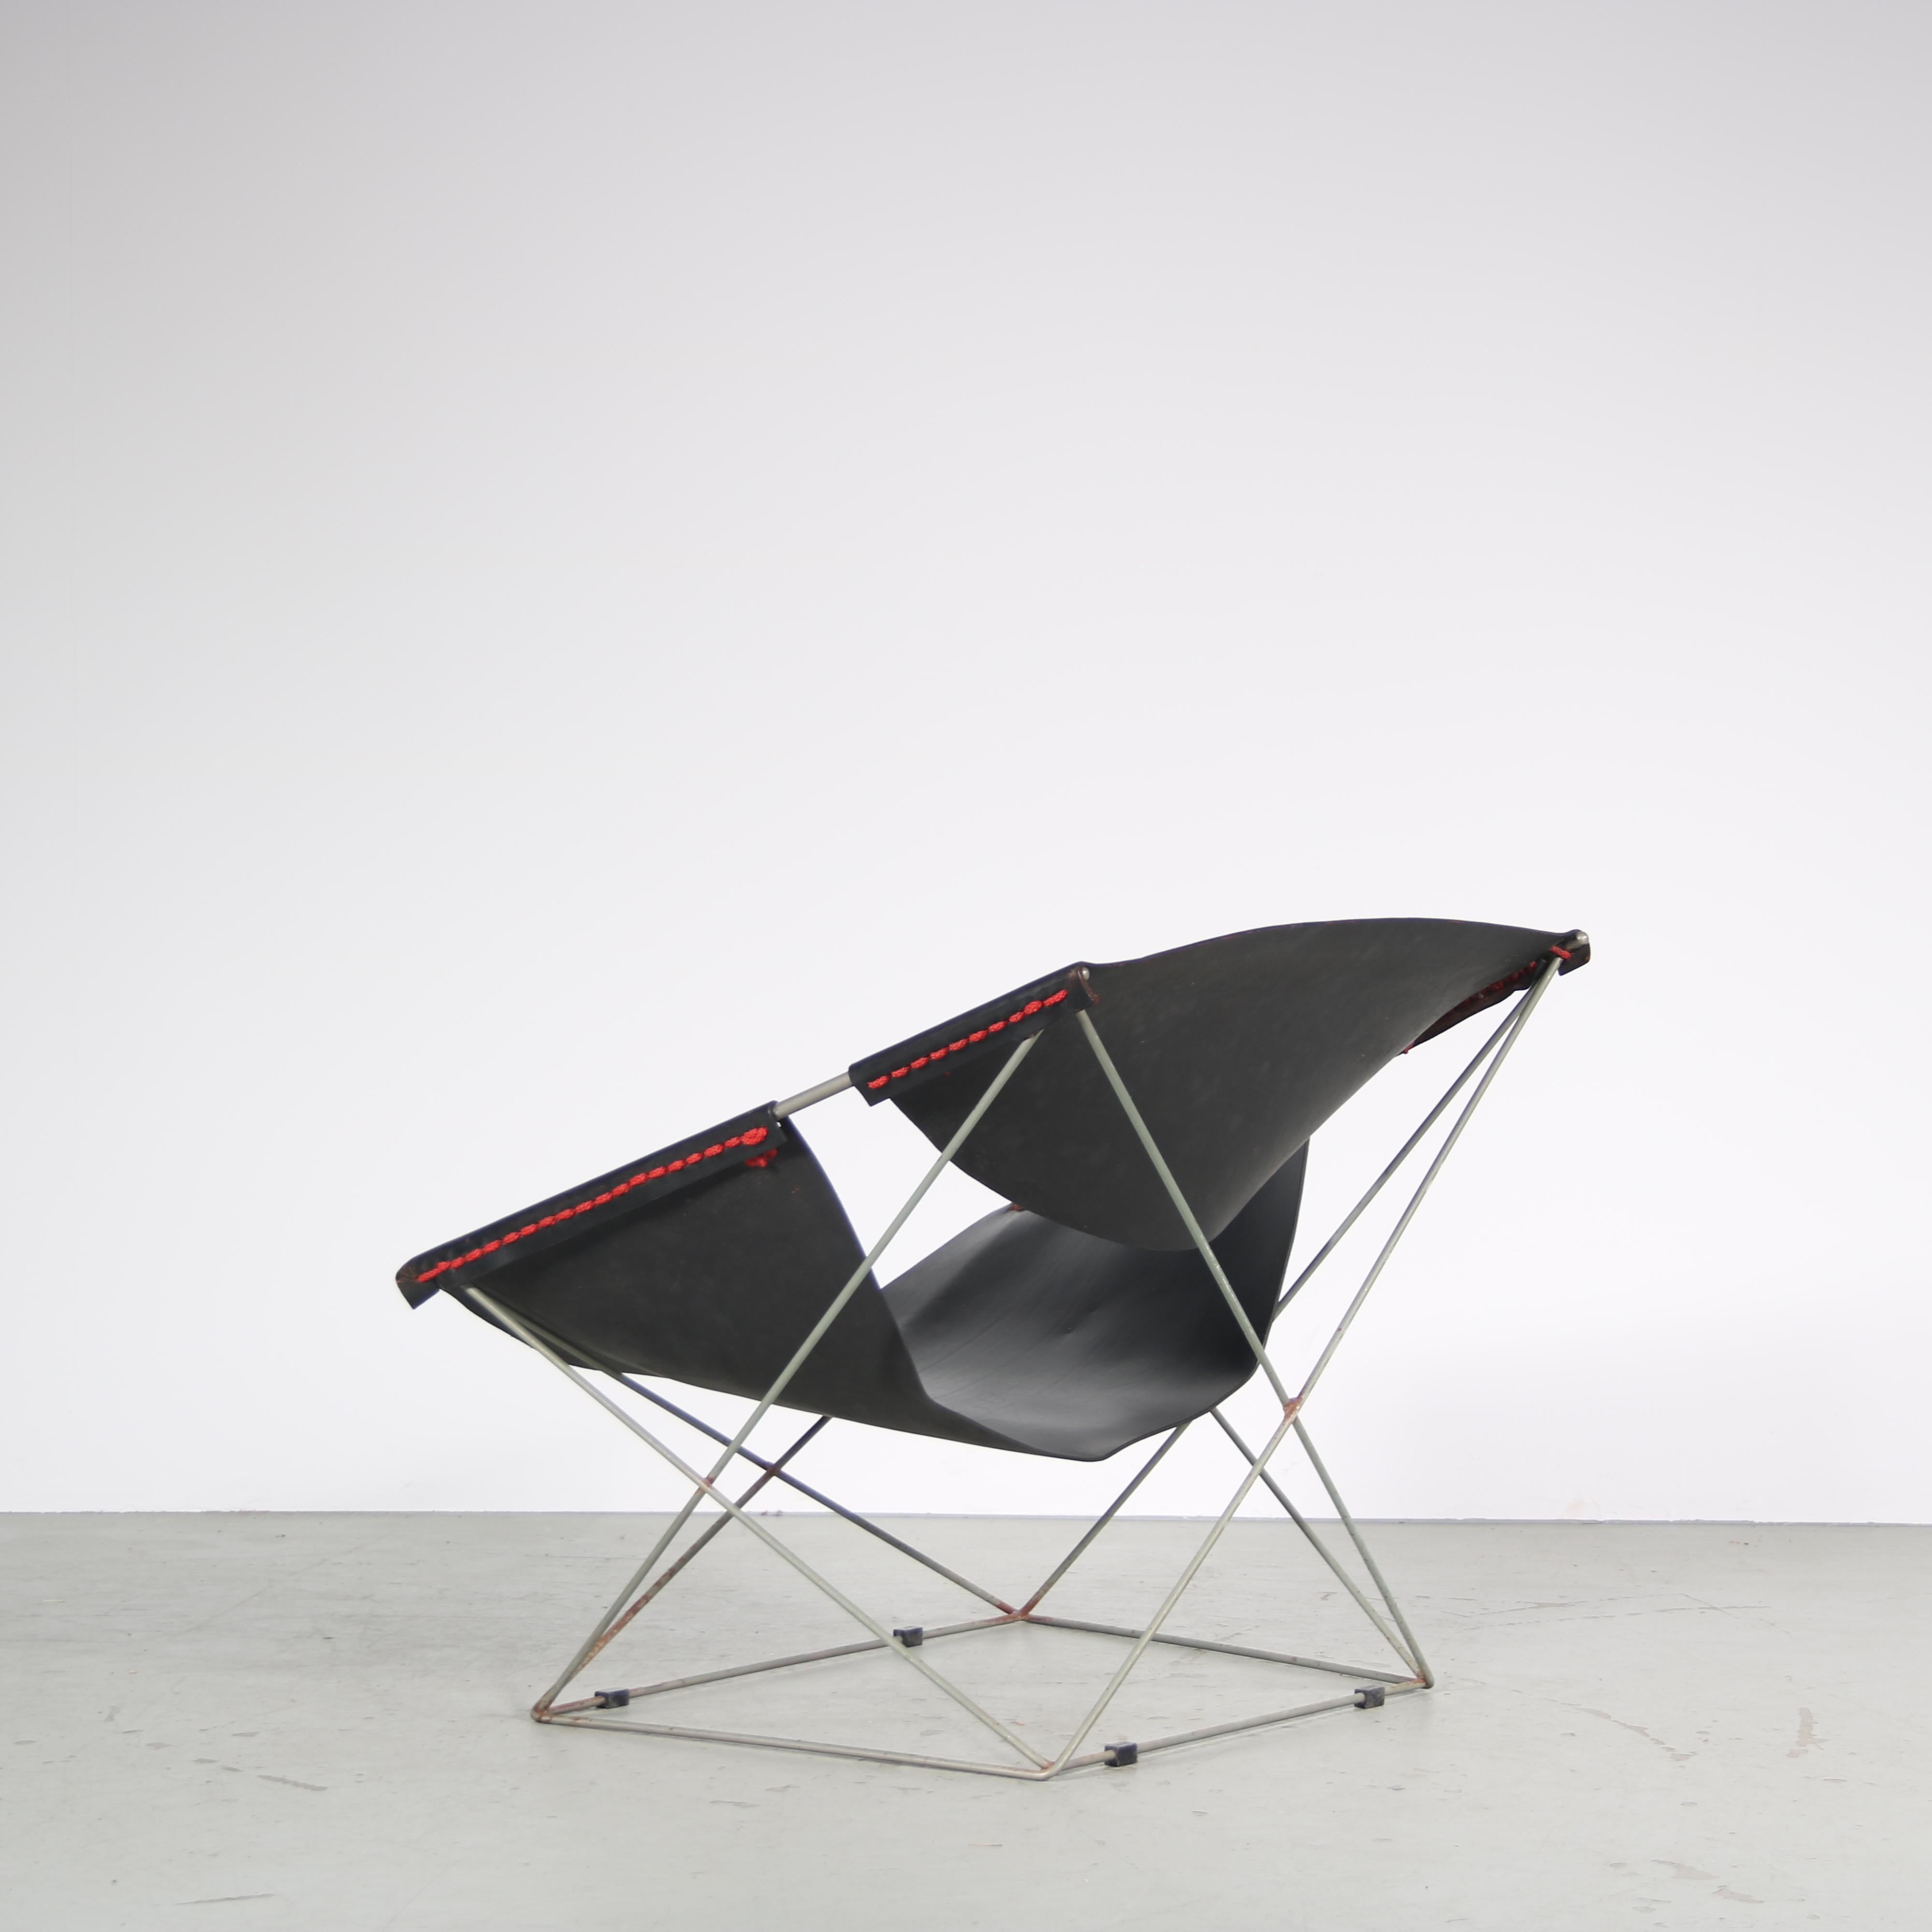 Pierre Paulin F675 “Butterfly” Chair by Artifort, Netherlands 1960 For Sale 1